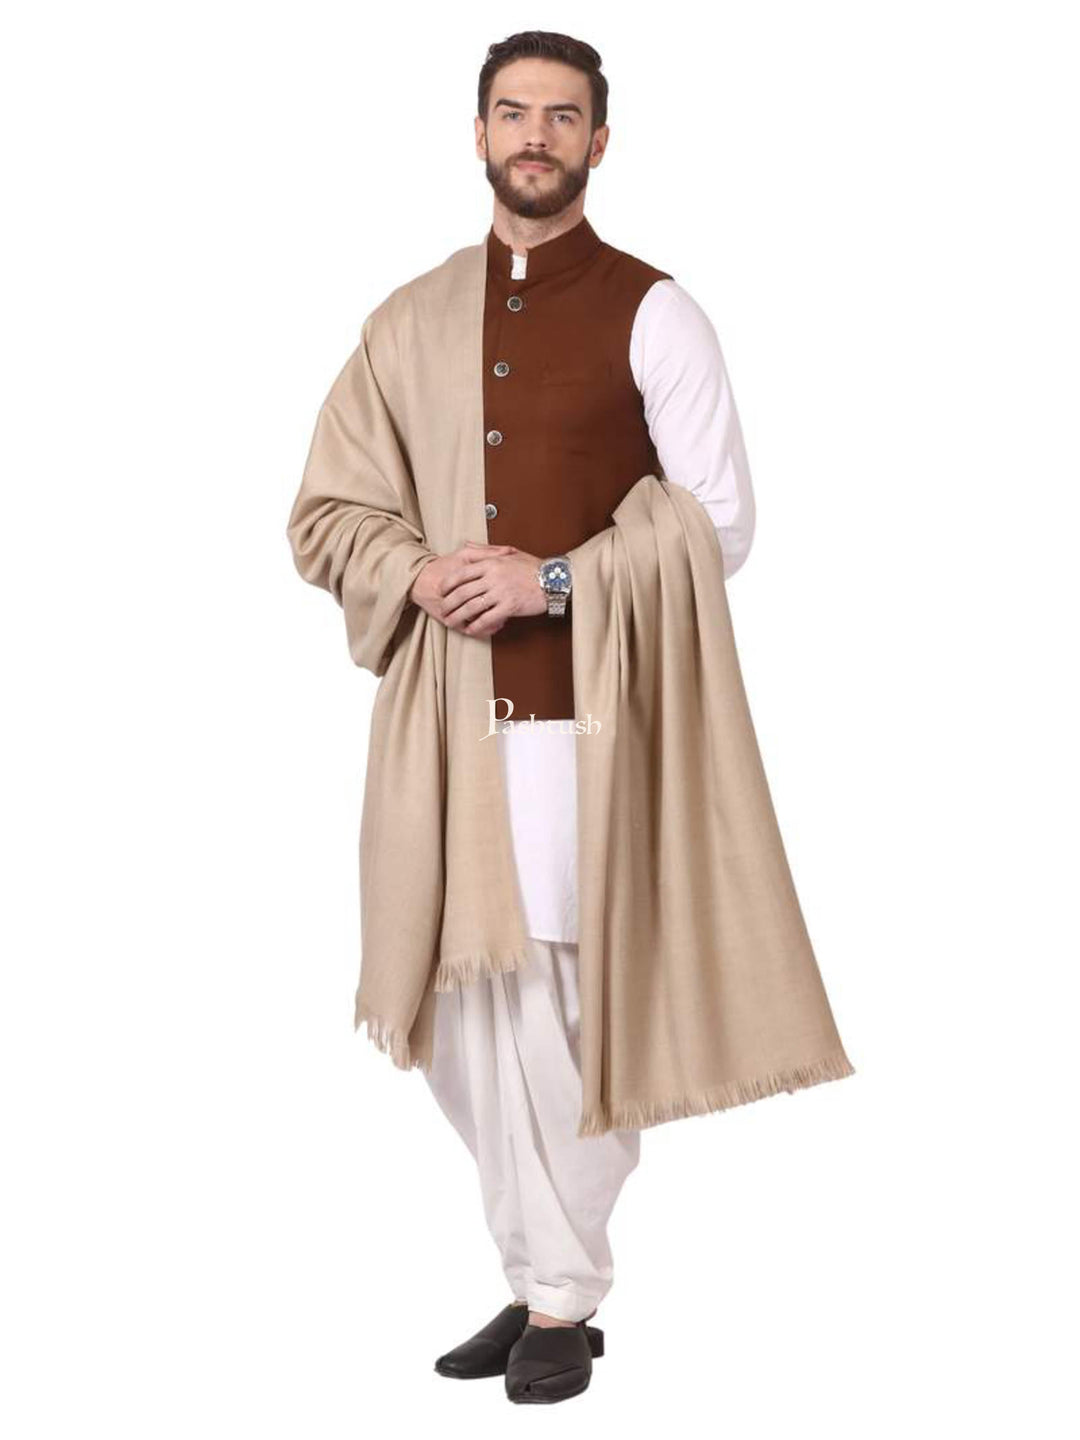 Pashtush India Mens Shawls Gents Shawl Pashtush Mens Lohi, Thick And Warm Gents Shawl, 50% Pure Wool, Beige